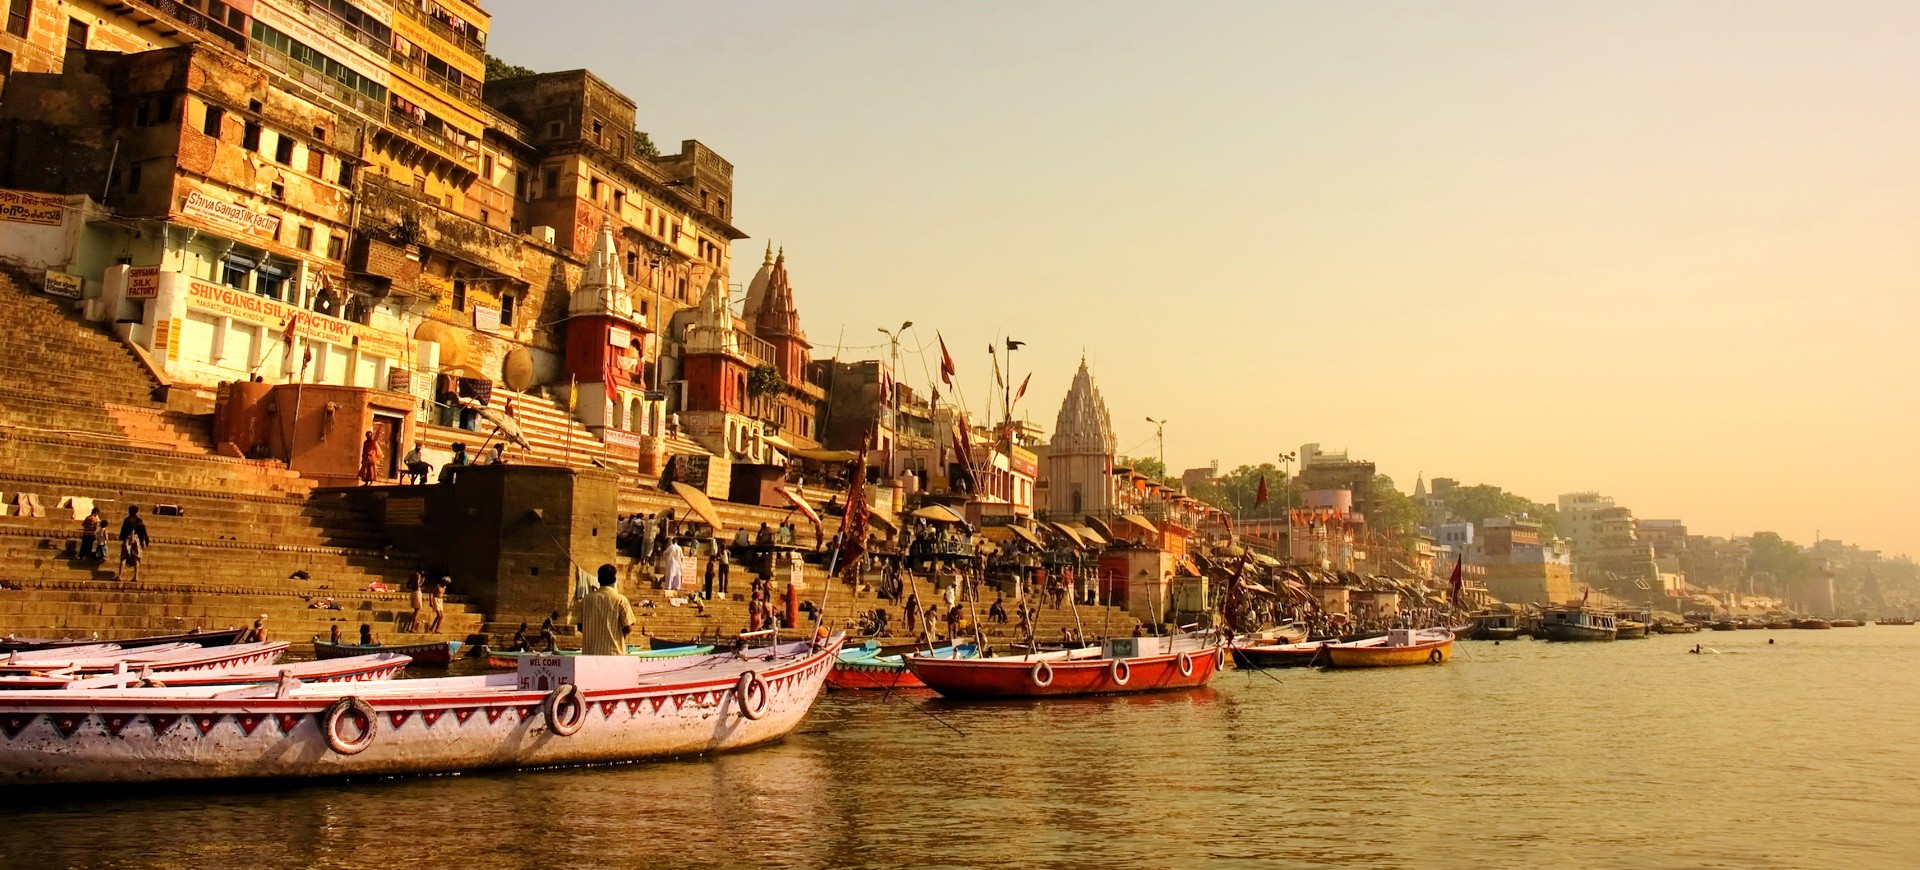 Ganges le fleuve sacré à Varanasi en Inde du nord